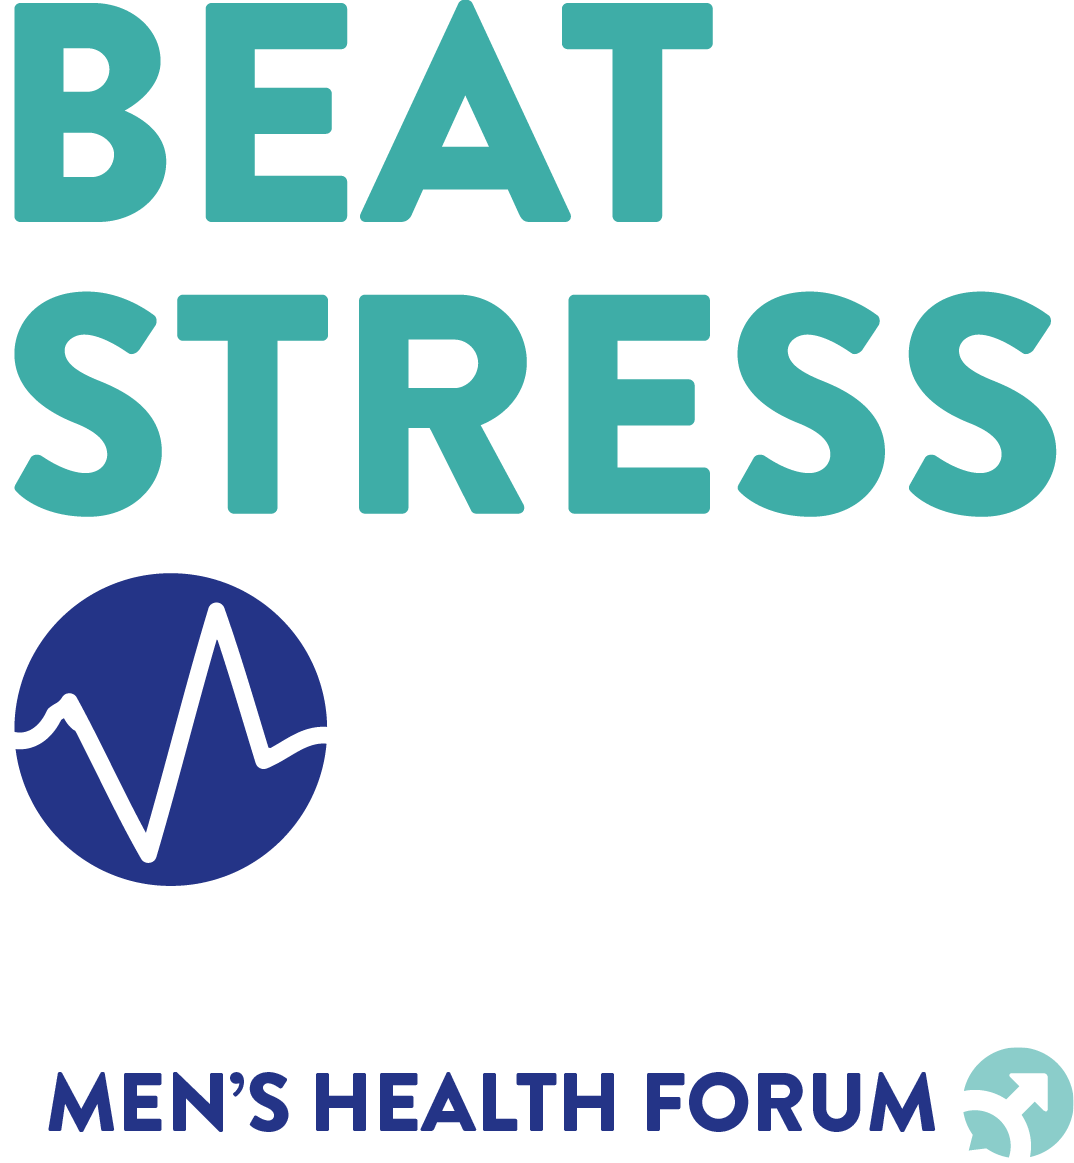 Men's Health Logo - Men's Health Week 2016: Logos Cartoons. Men's Health Forum